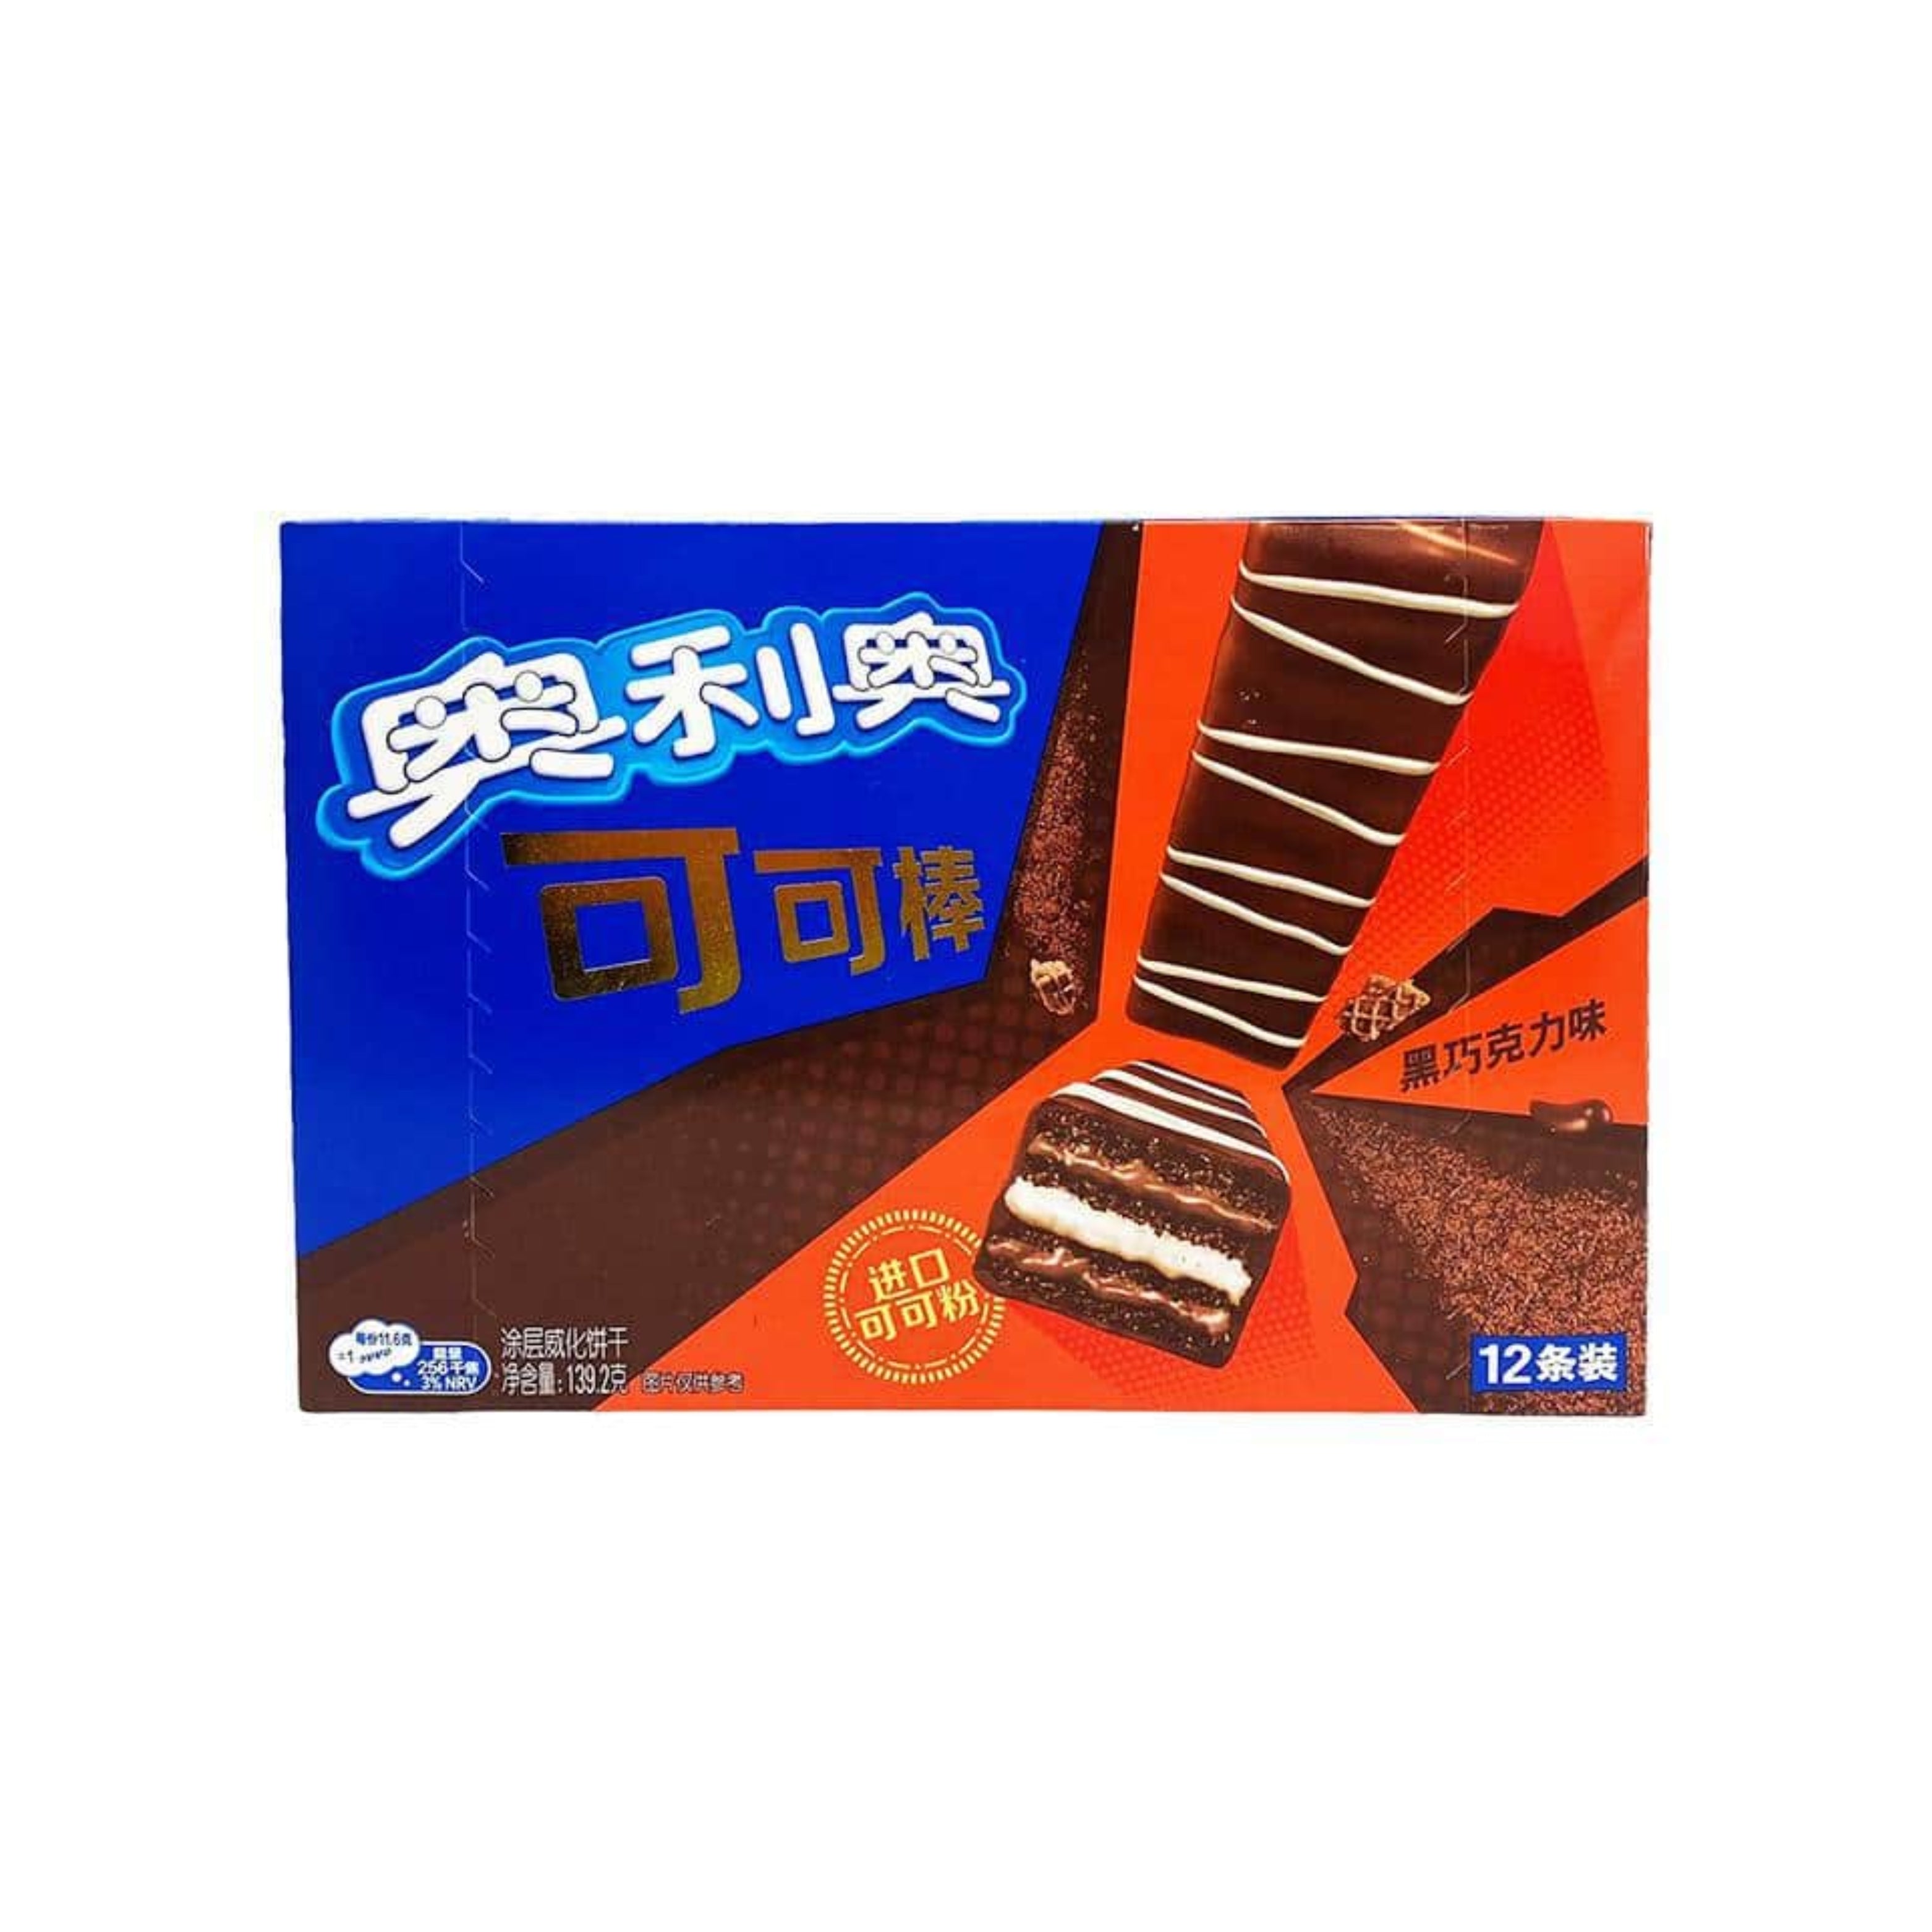 Oreo Chocolate Stick - Black Choco (China)